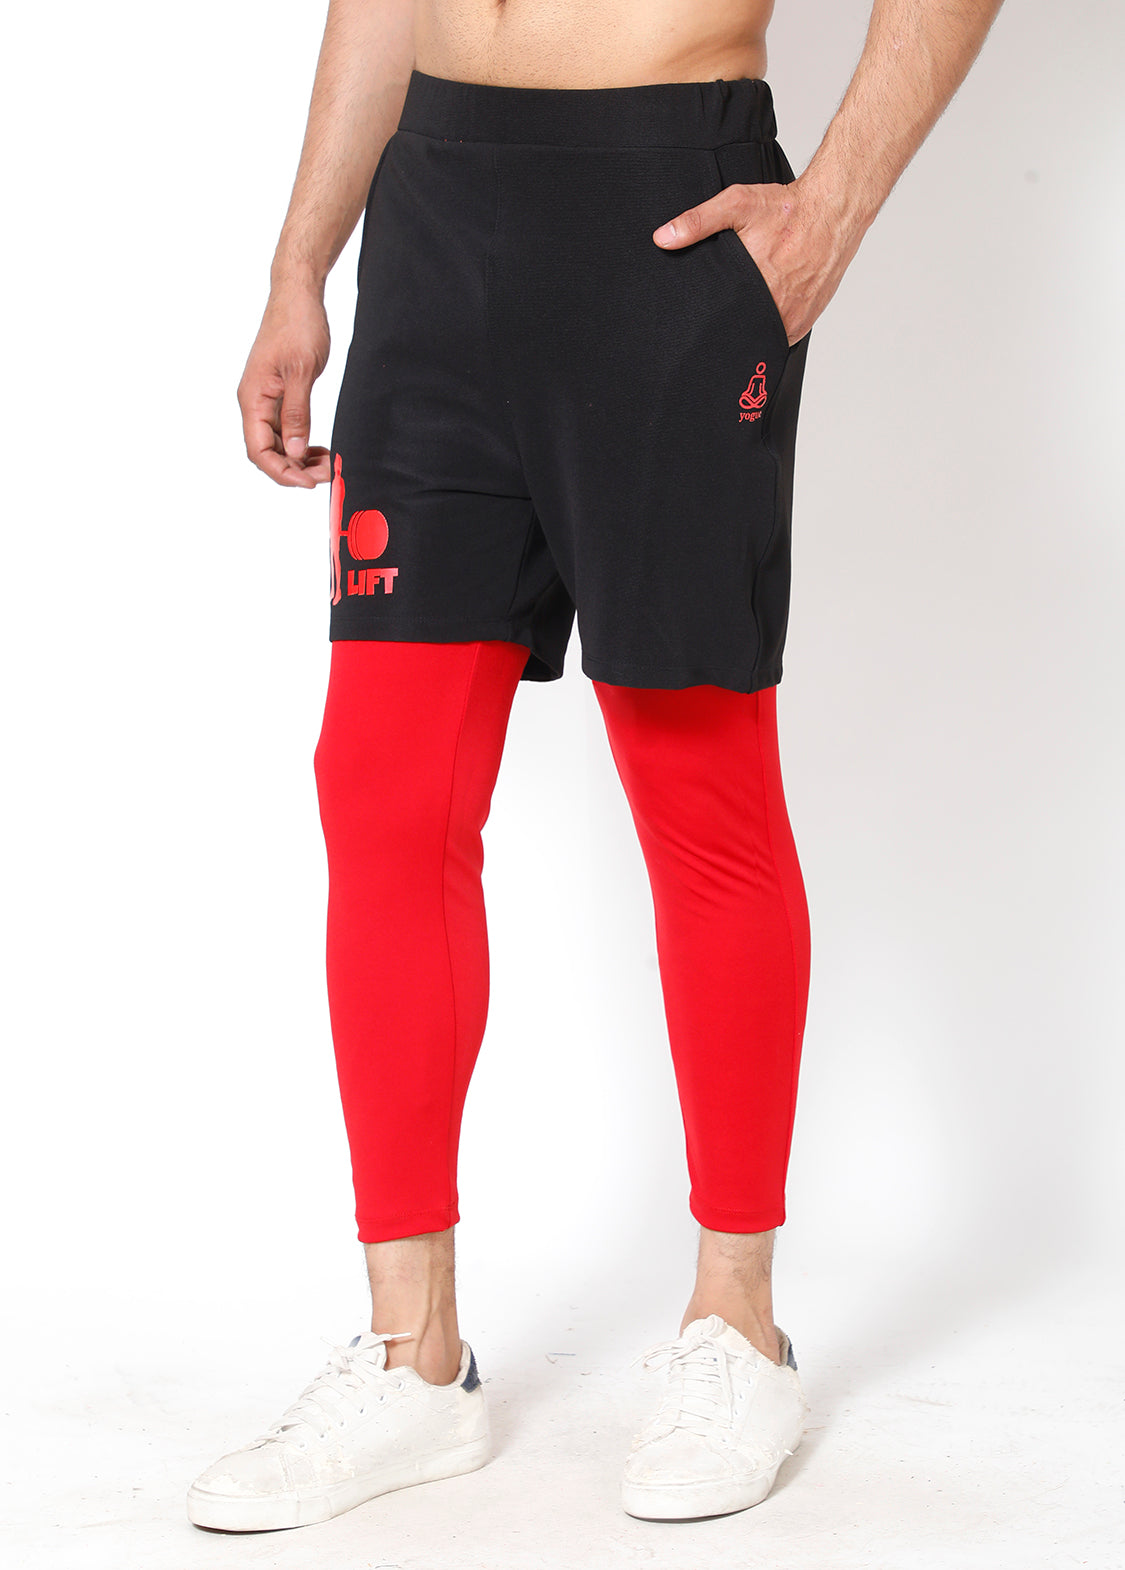 Black Crimson Deadlift 2-in-1 (Shorts+Tights) - Yogue Activewear